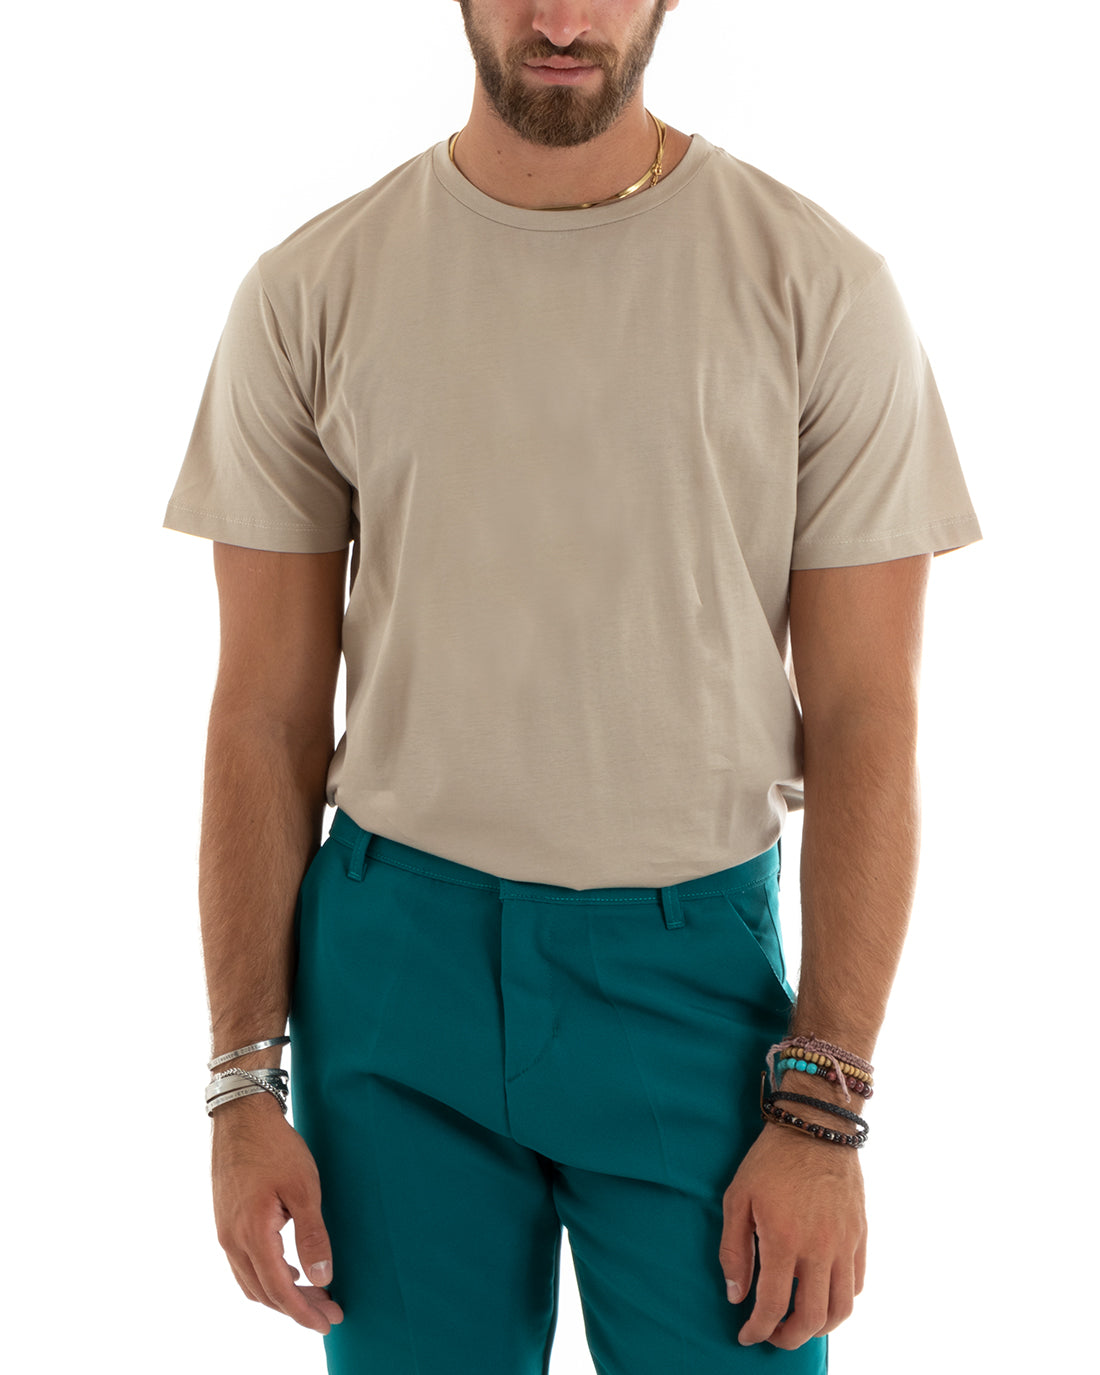 T-shirt Uomo Filo Di Scozia Basic Leggera Tinta Unita Beige Girocollo Casual GIOSAL-TS2978A